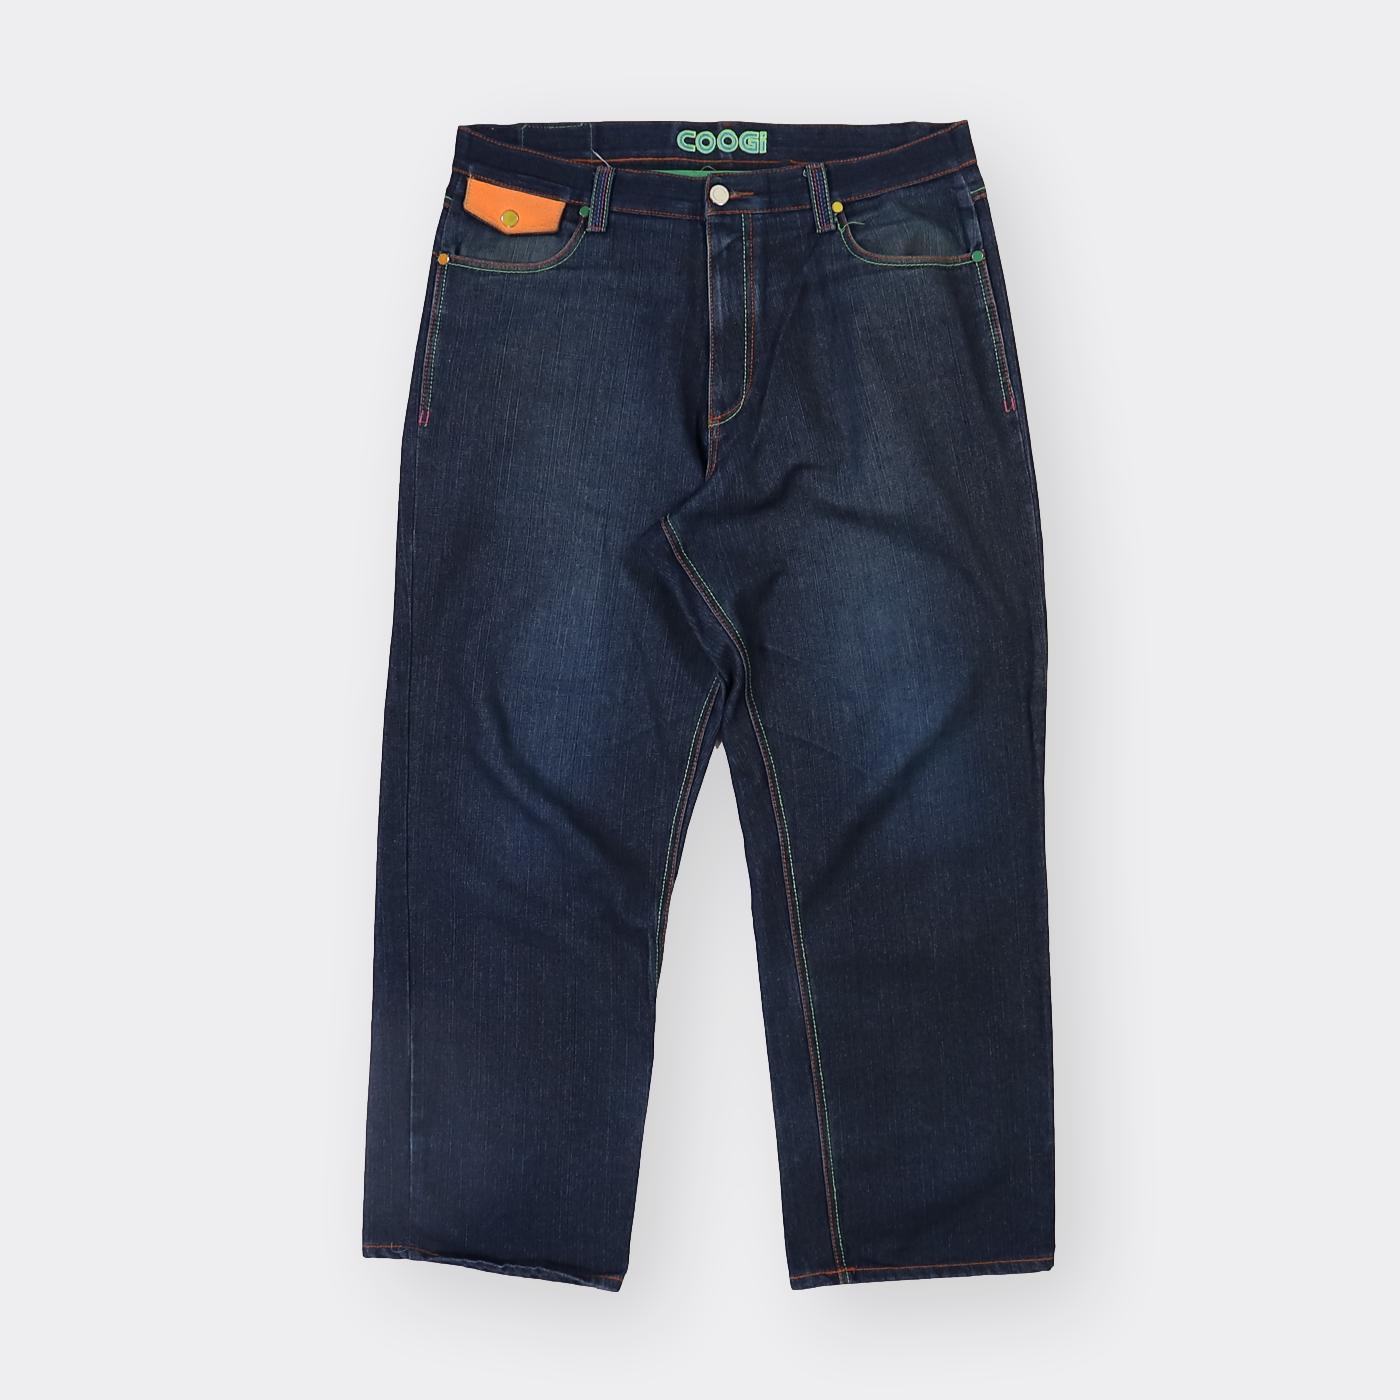 Coogi Vintage Denim Jeans - 32" x 29" - Known Source